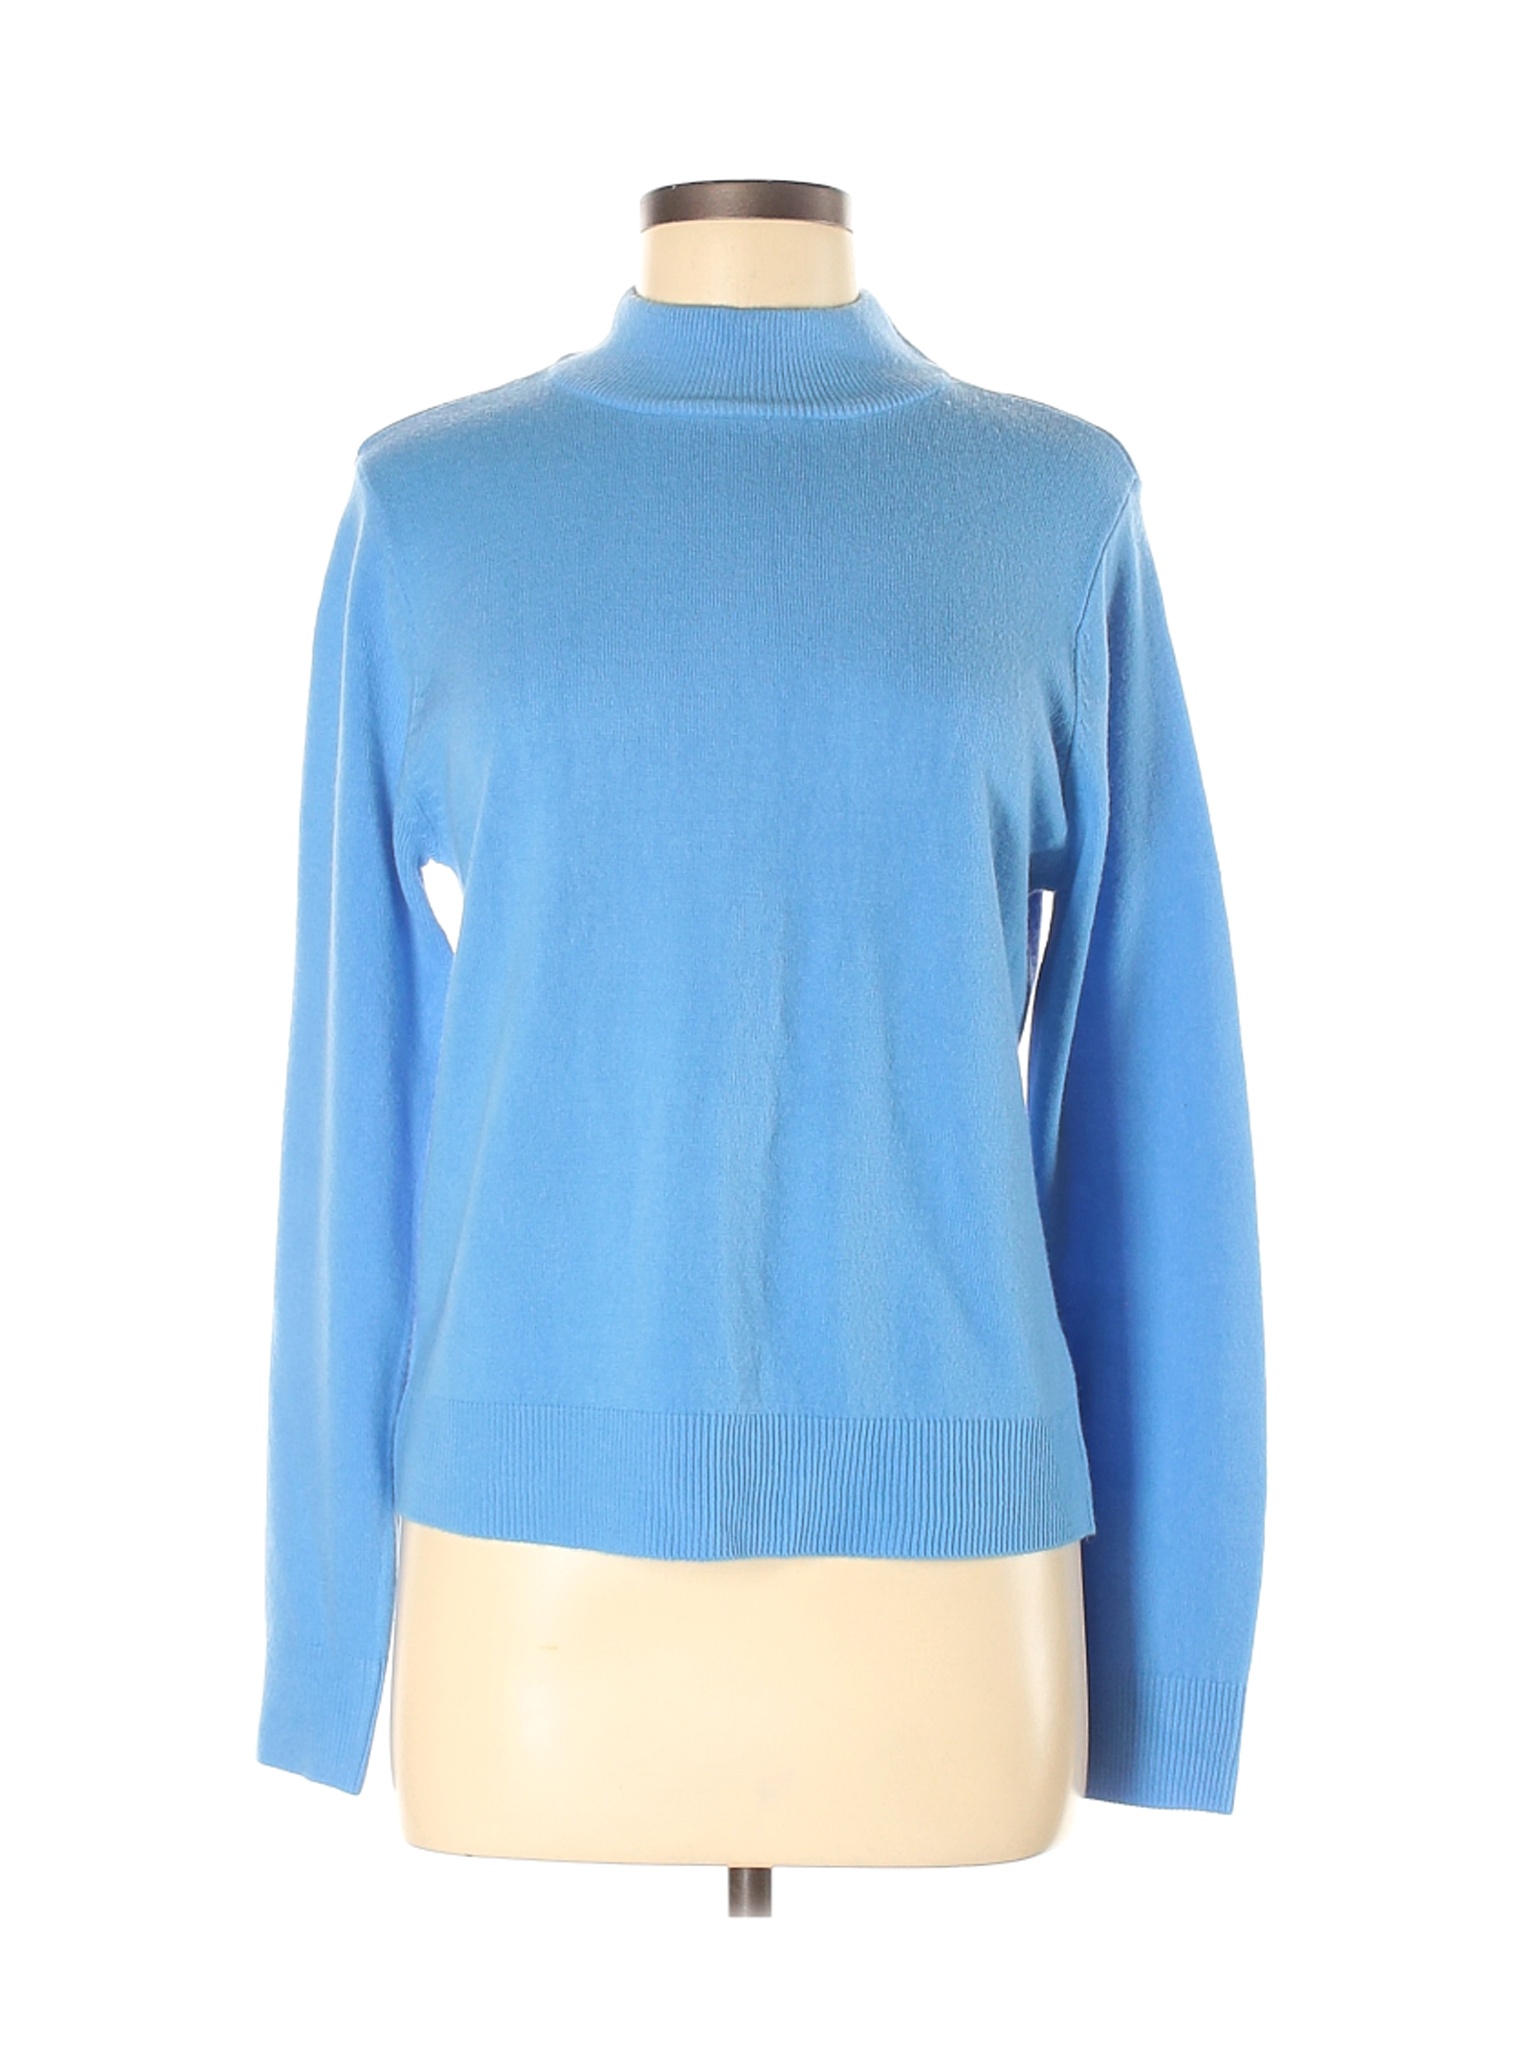 Blair Women Blue Pullover Sweater M | eBay